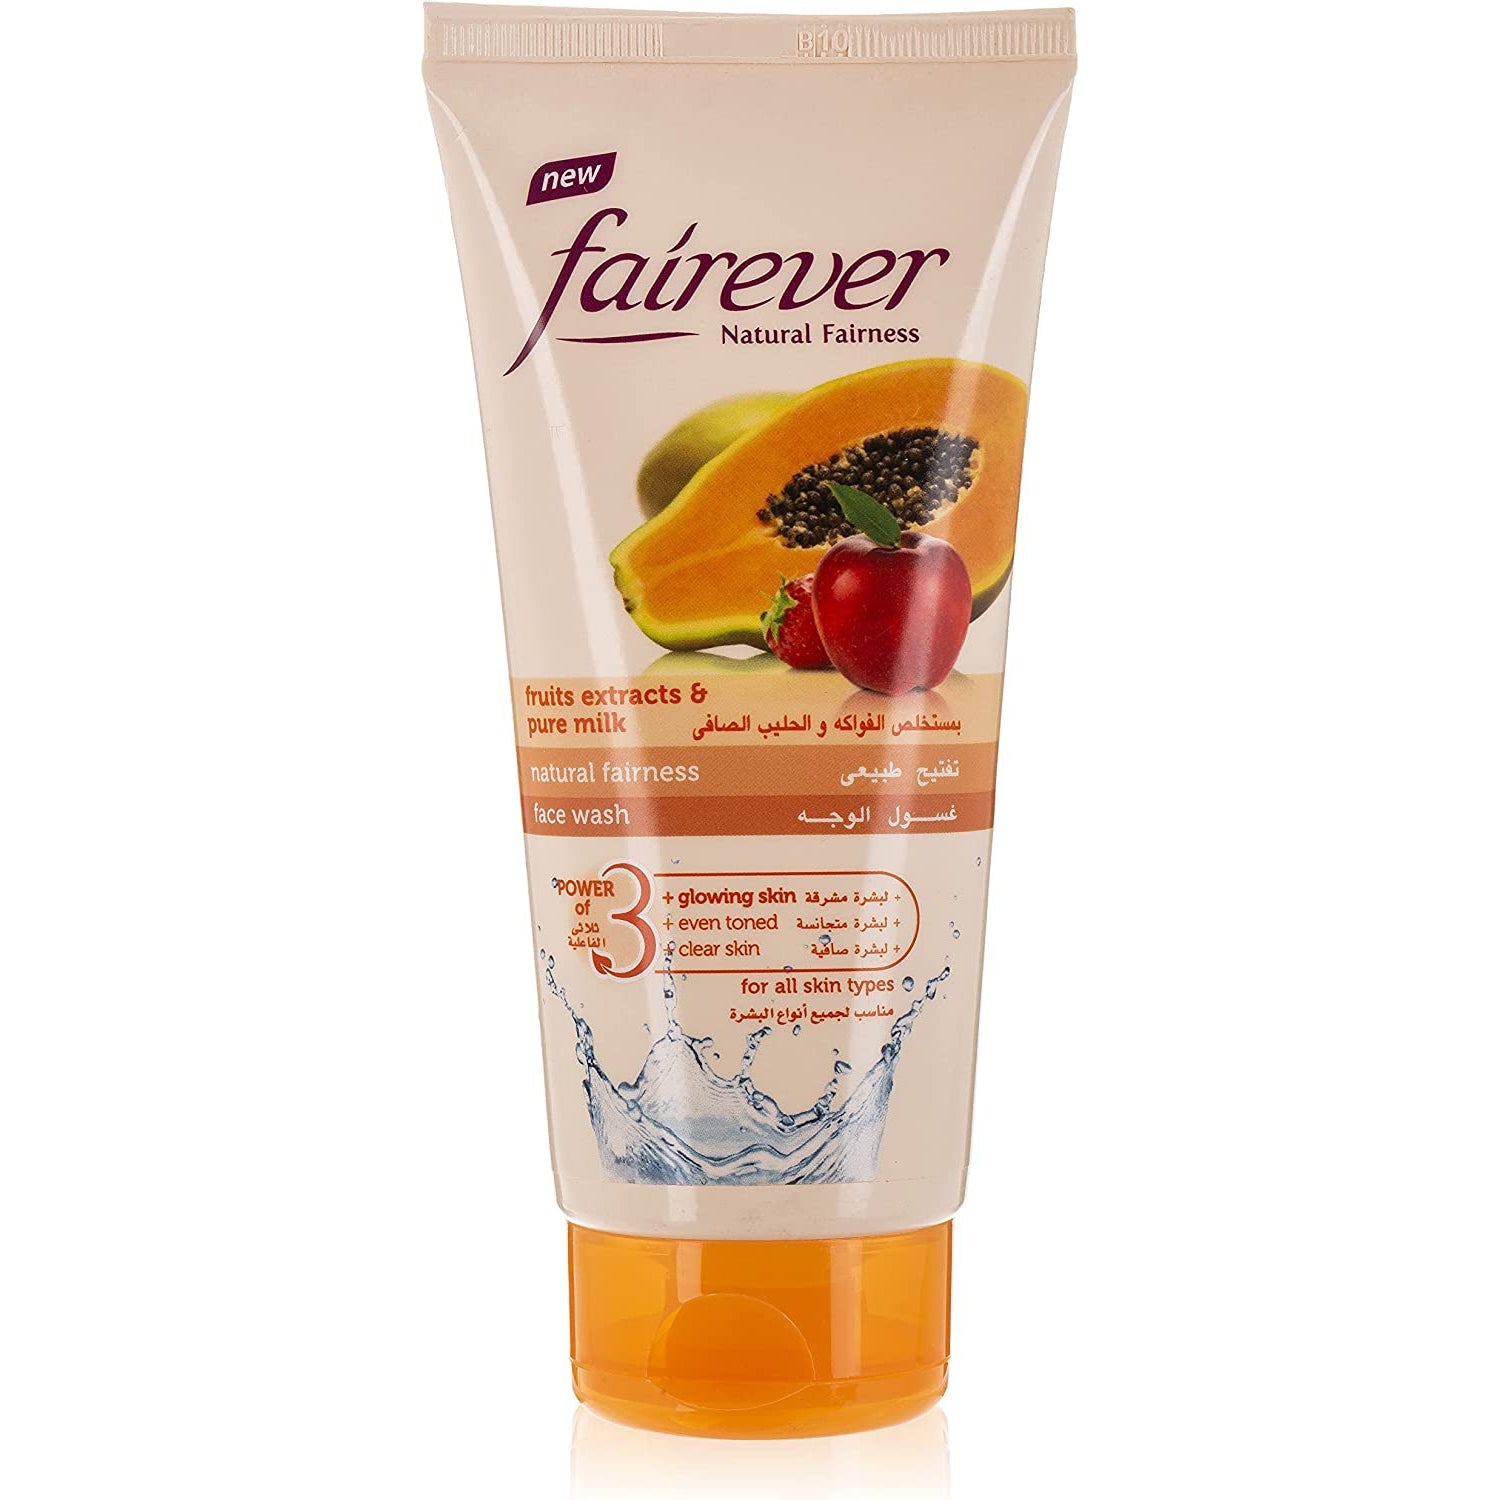 fairever-facewash-fruit-extracts-150mlFairever Fruit Daily Cleansing Fairness Facewash, 150Ml